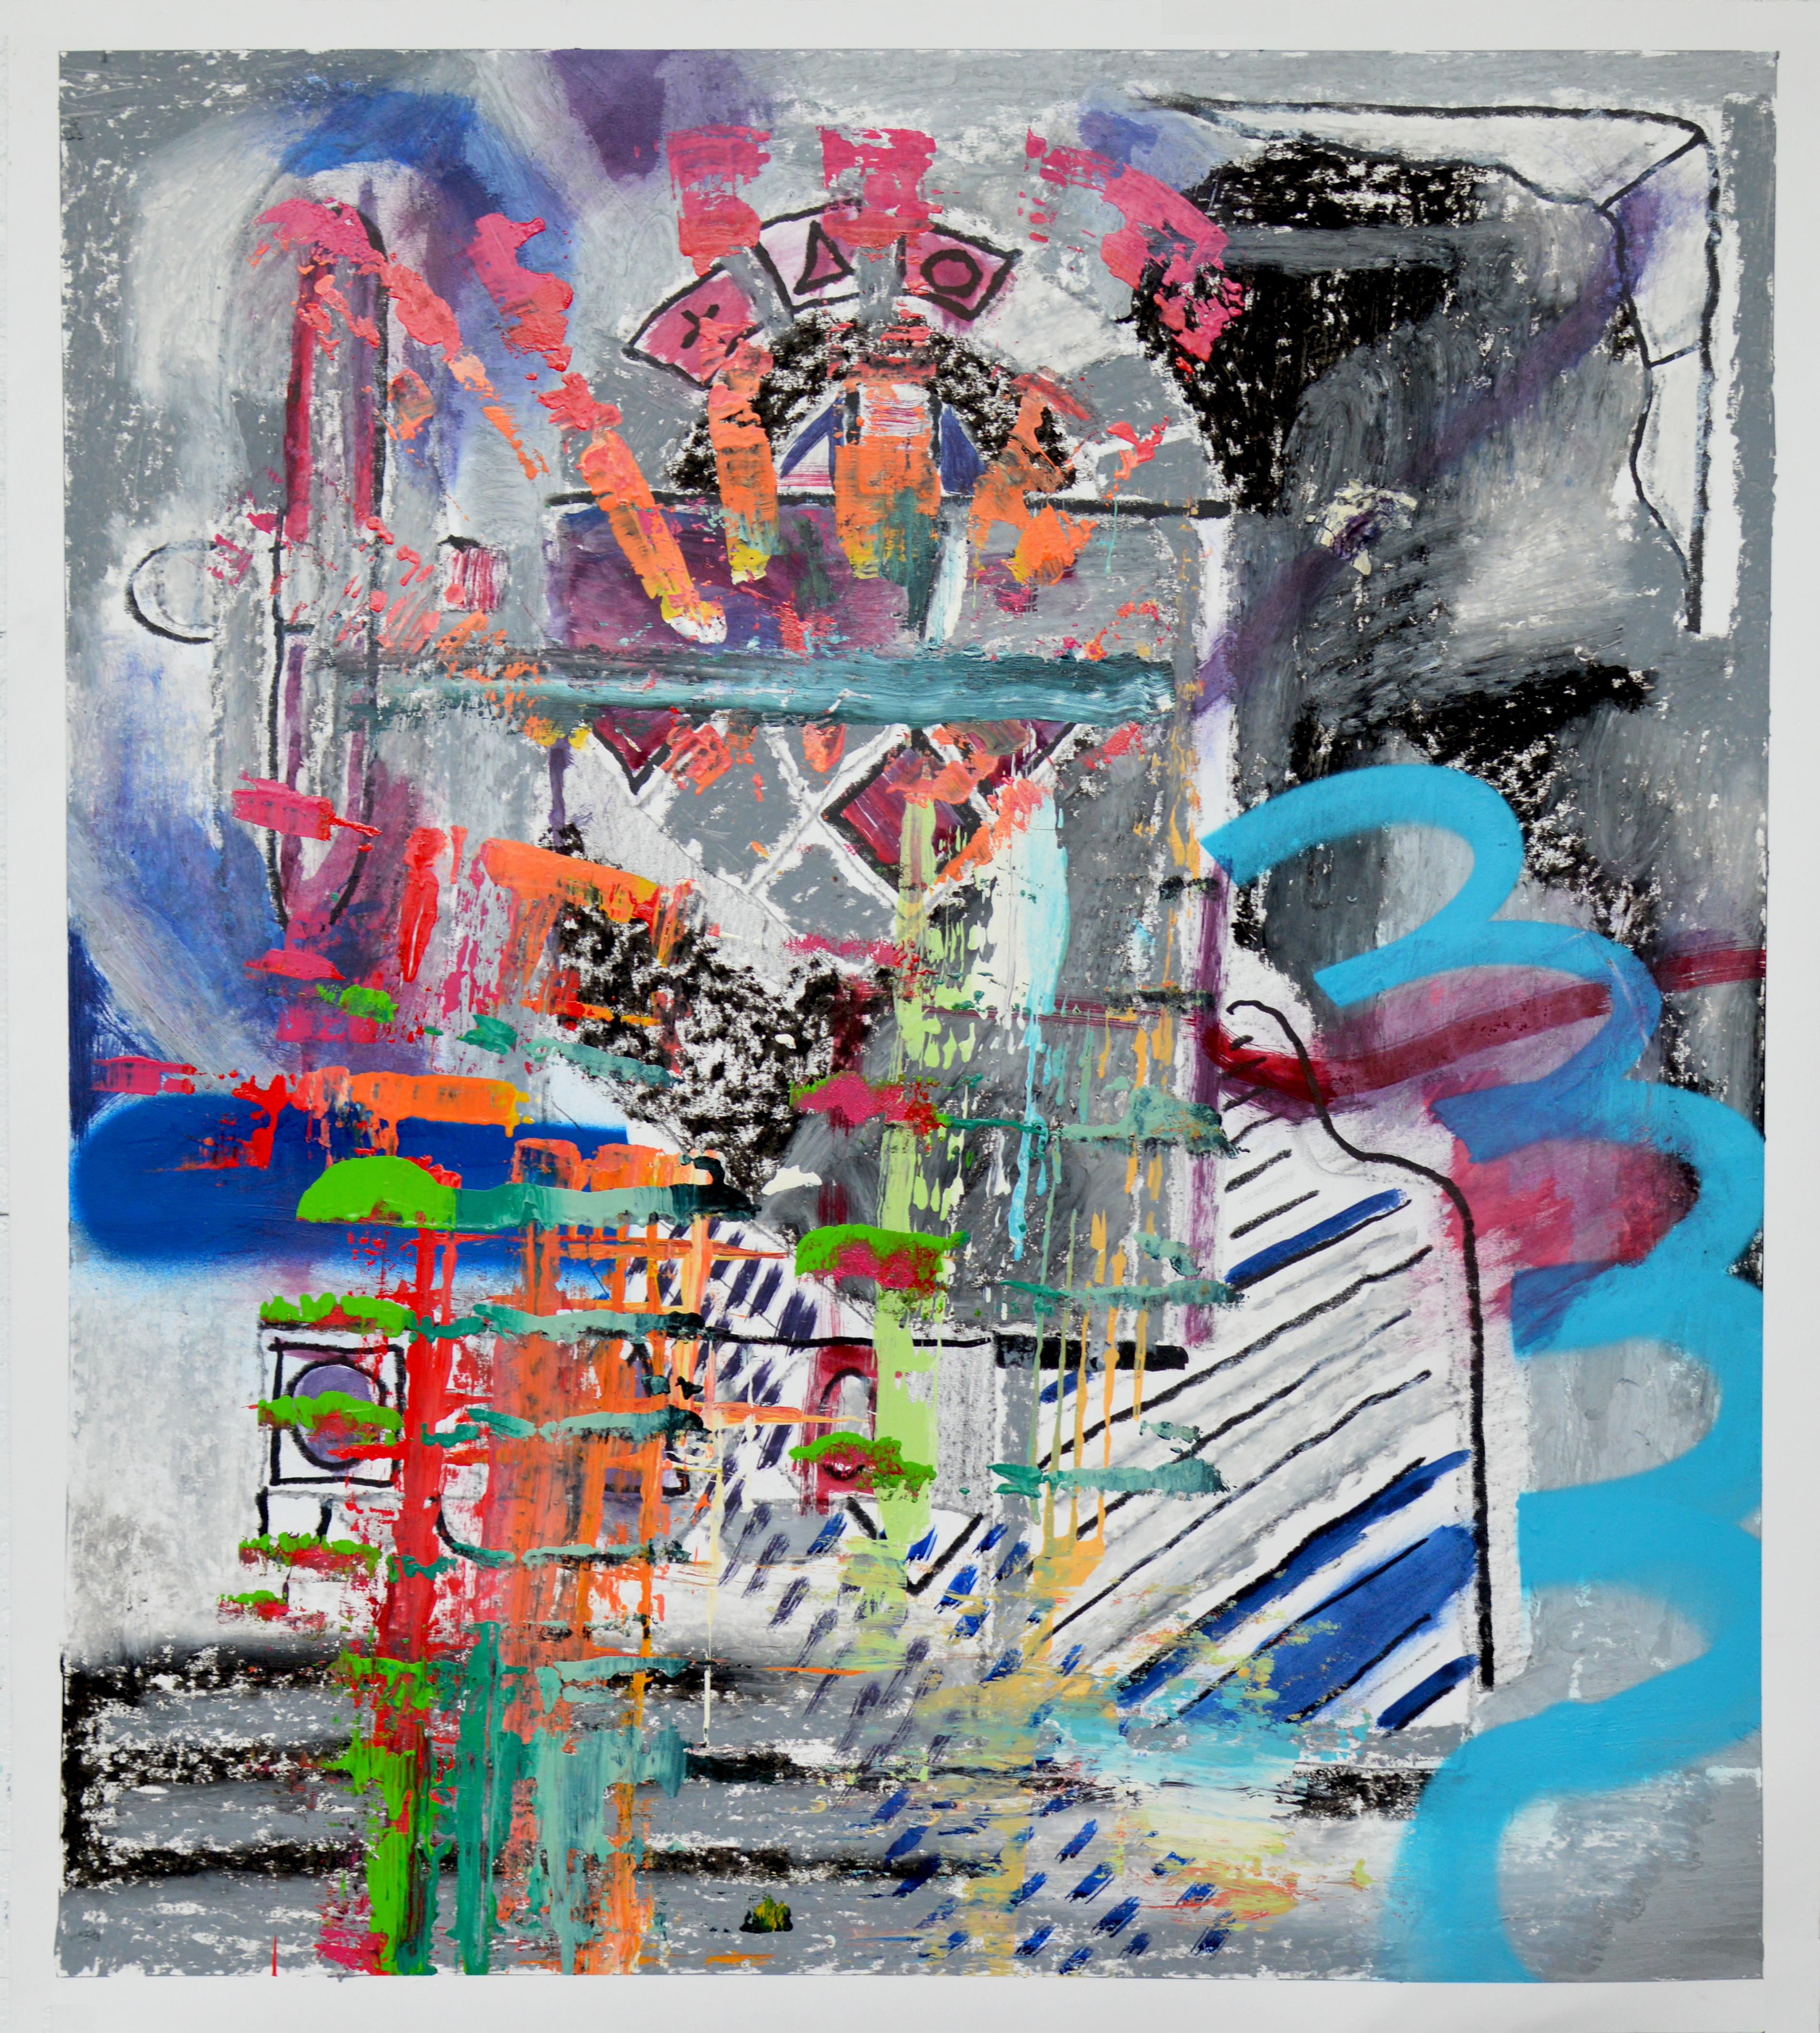 Companion (abstract art, post graffiti, street art, Neo-expressionism) - Painting by JB Nearsy